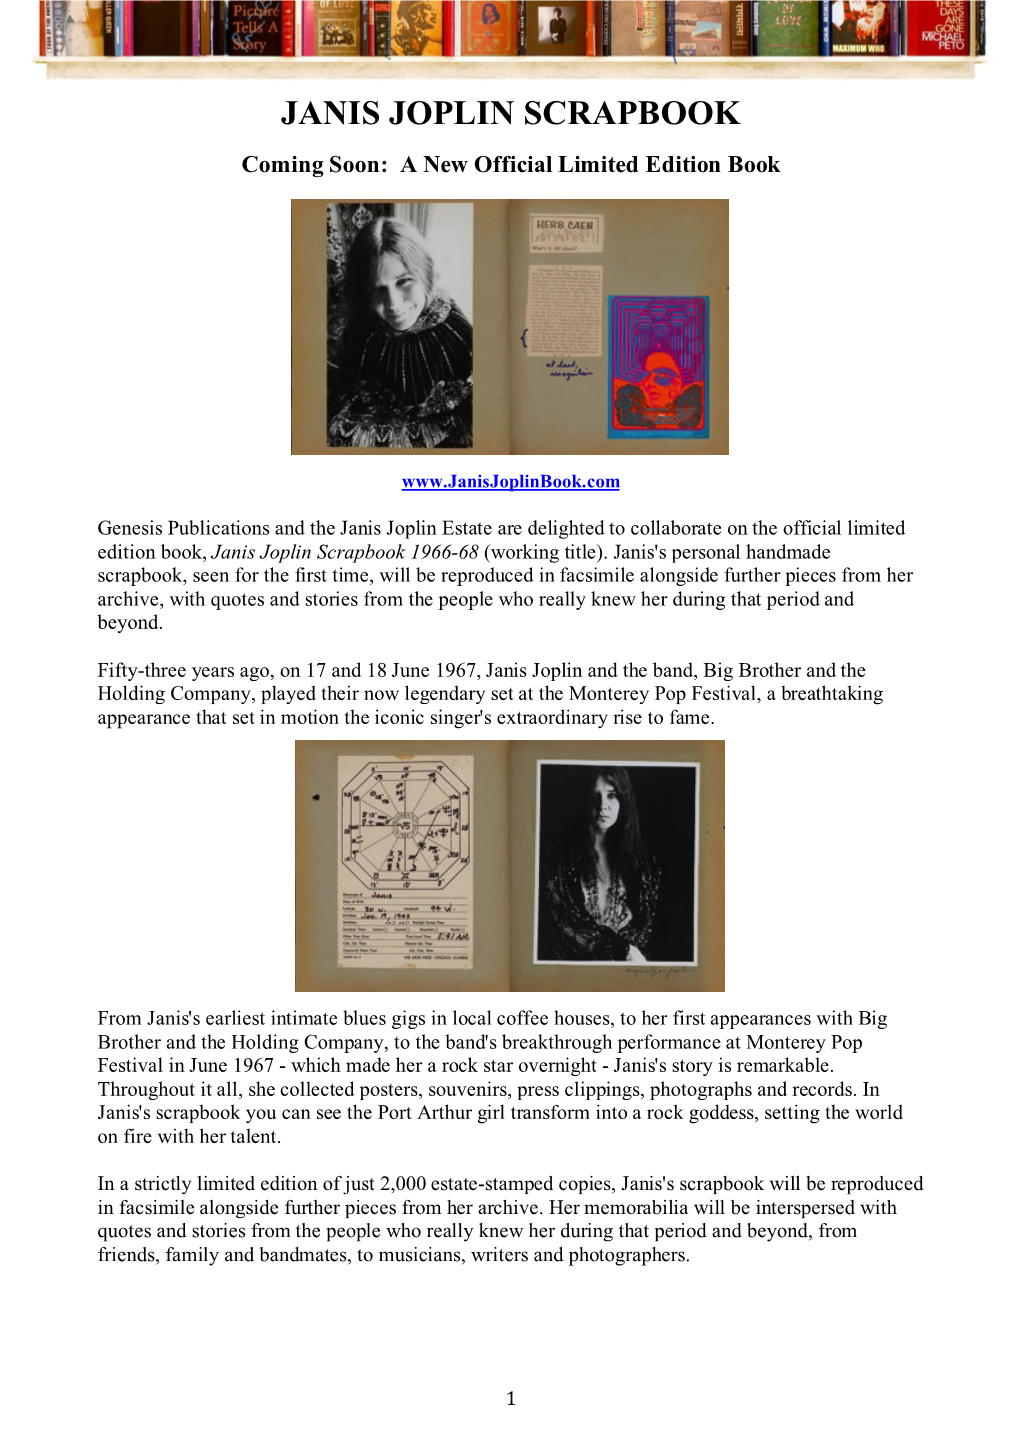 Janis Joplin Scrapbook Announcement